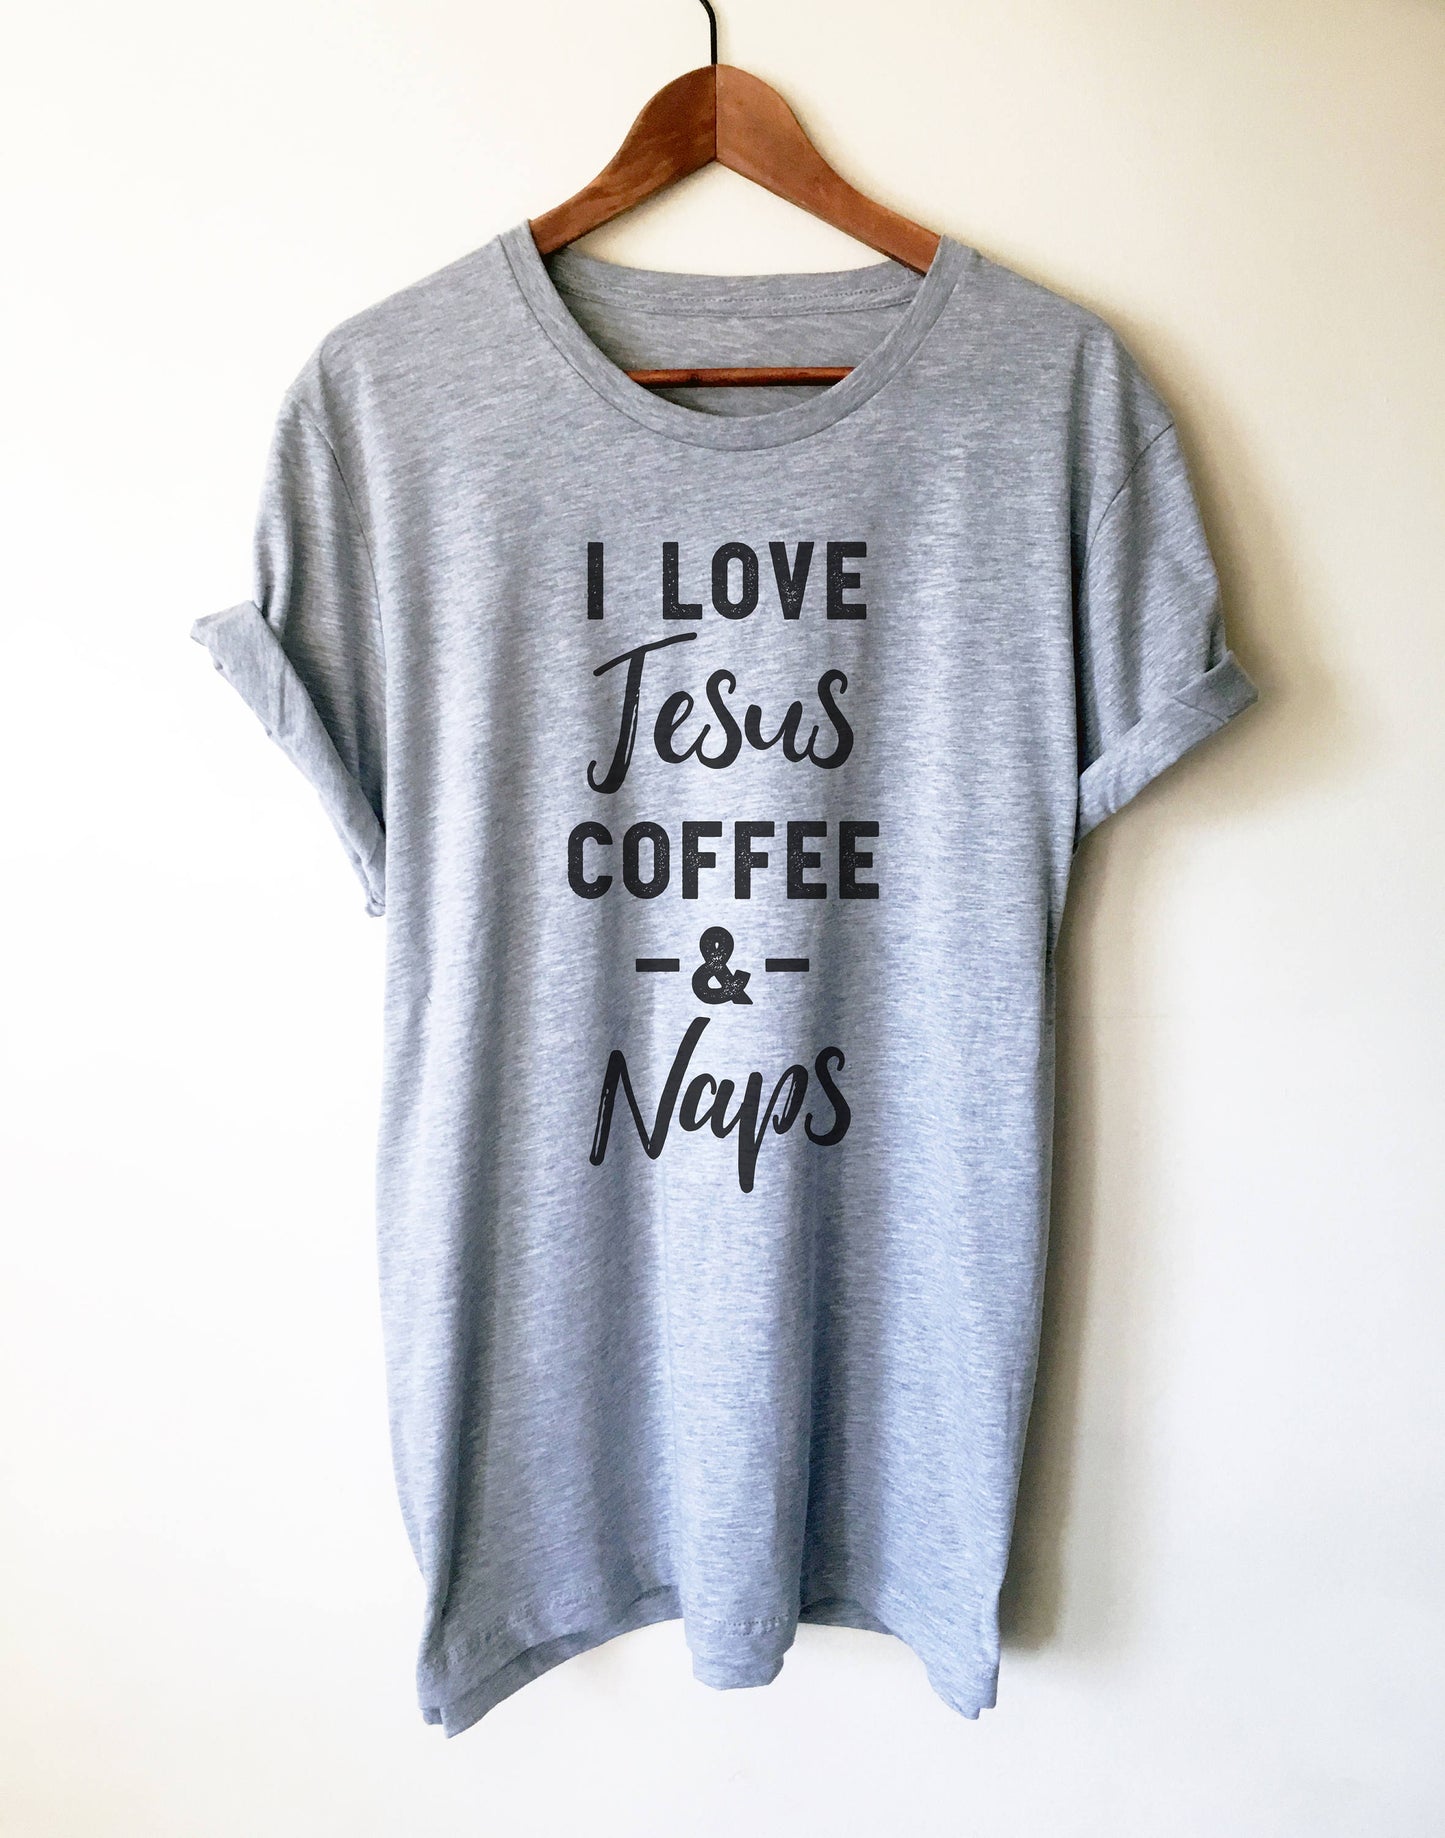 I Love Jesus Coffee & Naps Unisex Shirt - Coffee And Jesus, Christian Shirt, Christian Jesus Tee, Christian TShirt, Jesus And Coffee